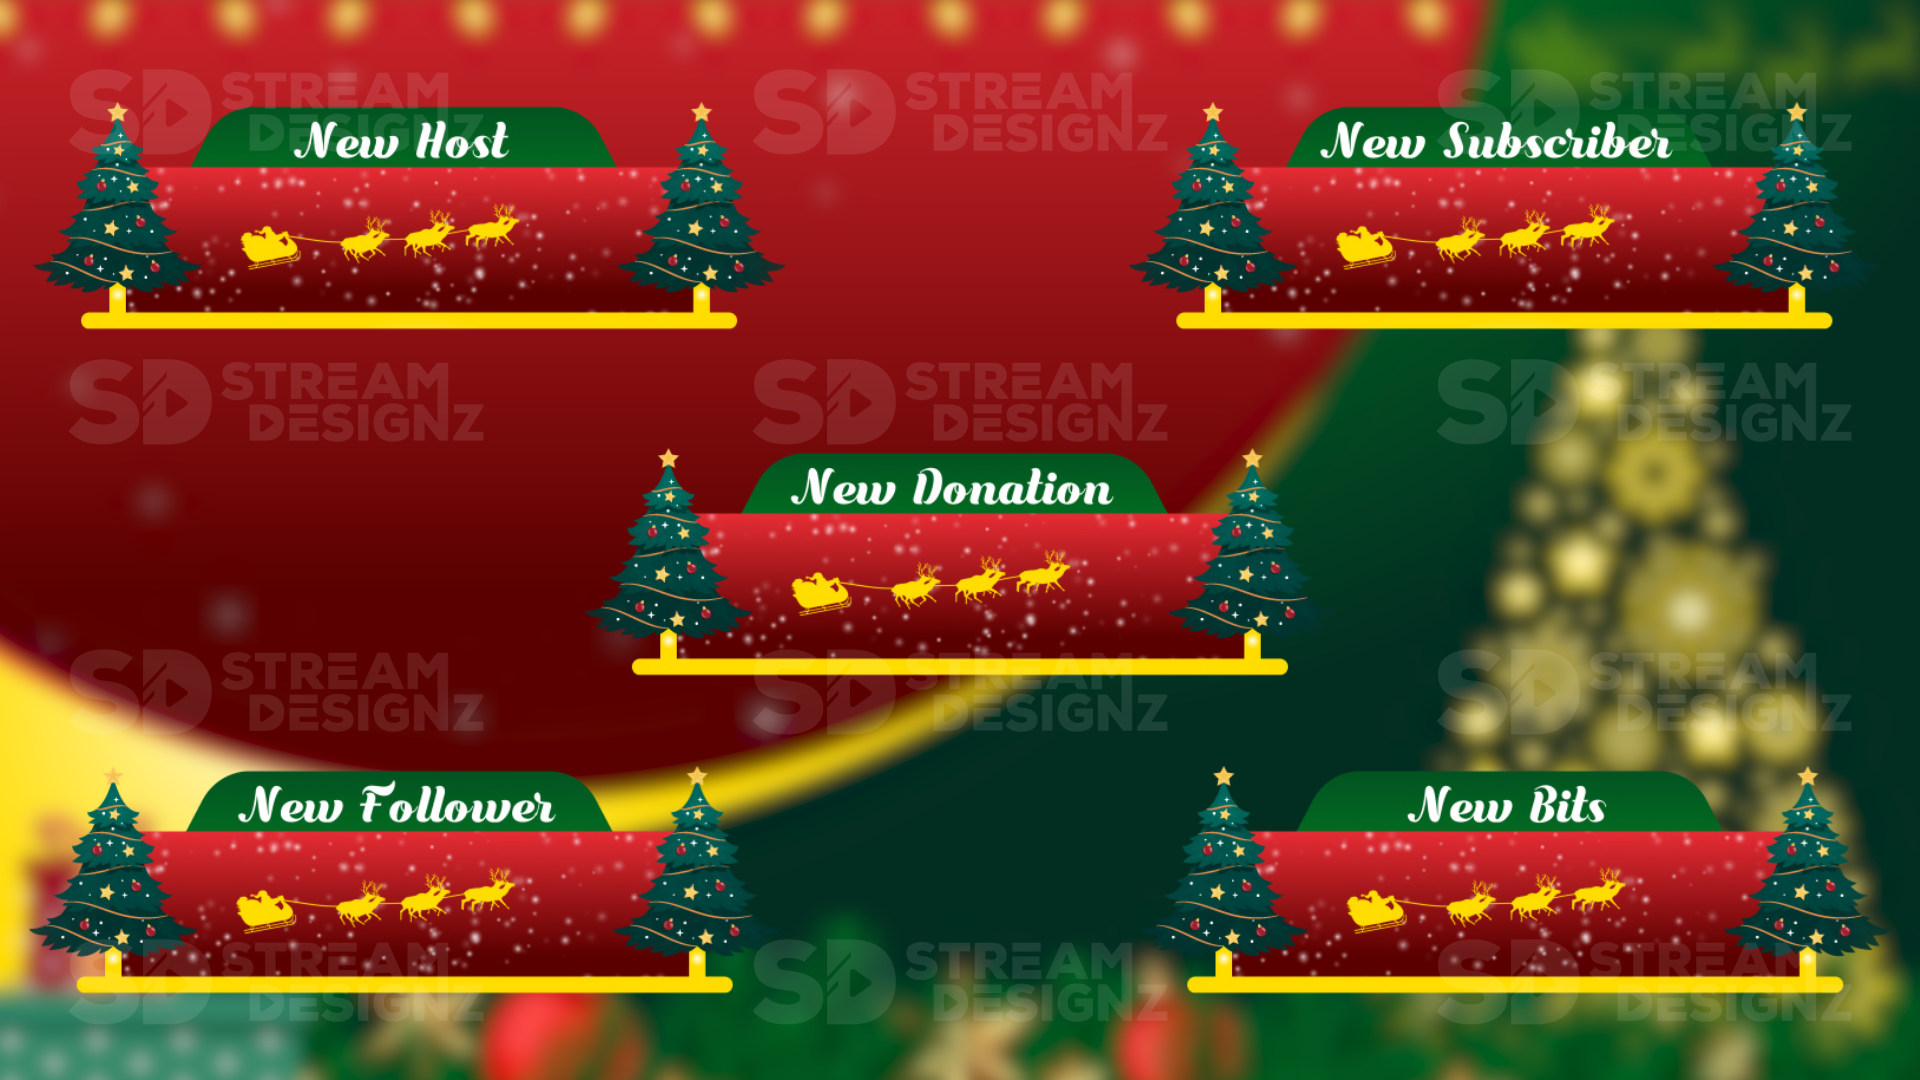 Christmas Animated Stream Alerts Merry Christmas preview image stream designz